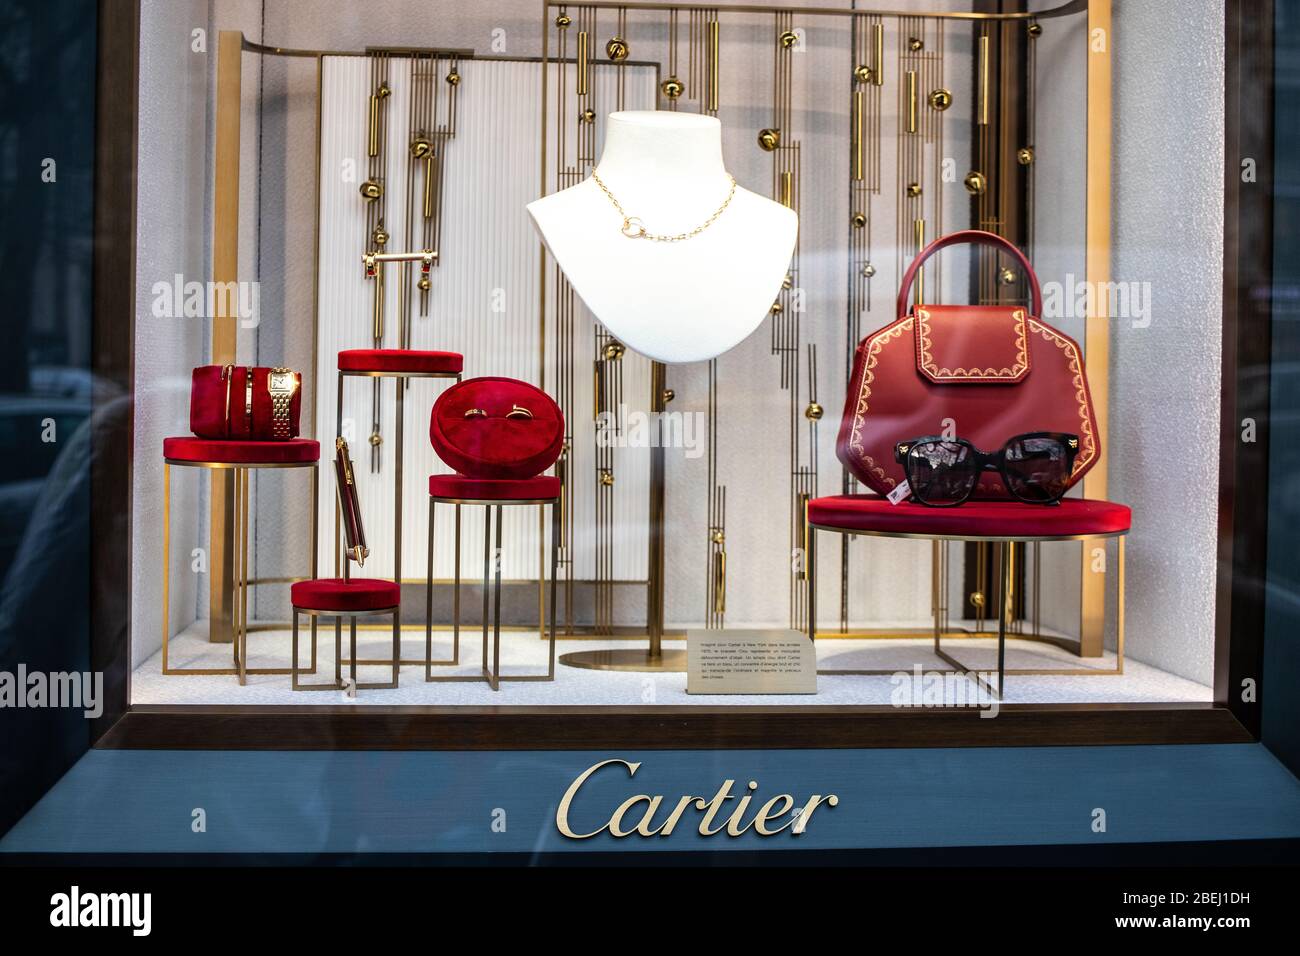 Cartier jewelry store, window shop 